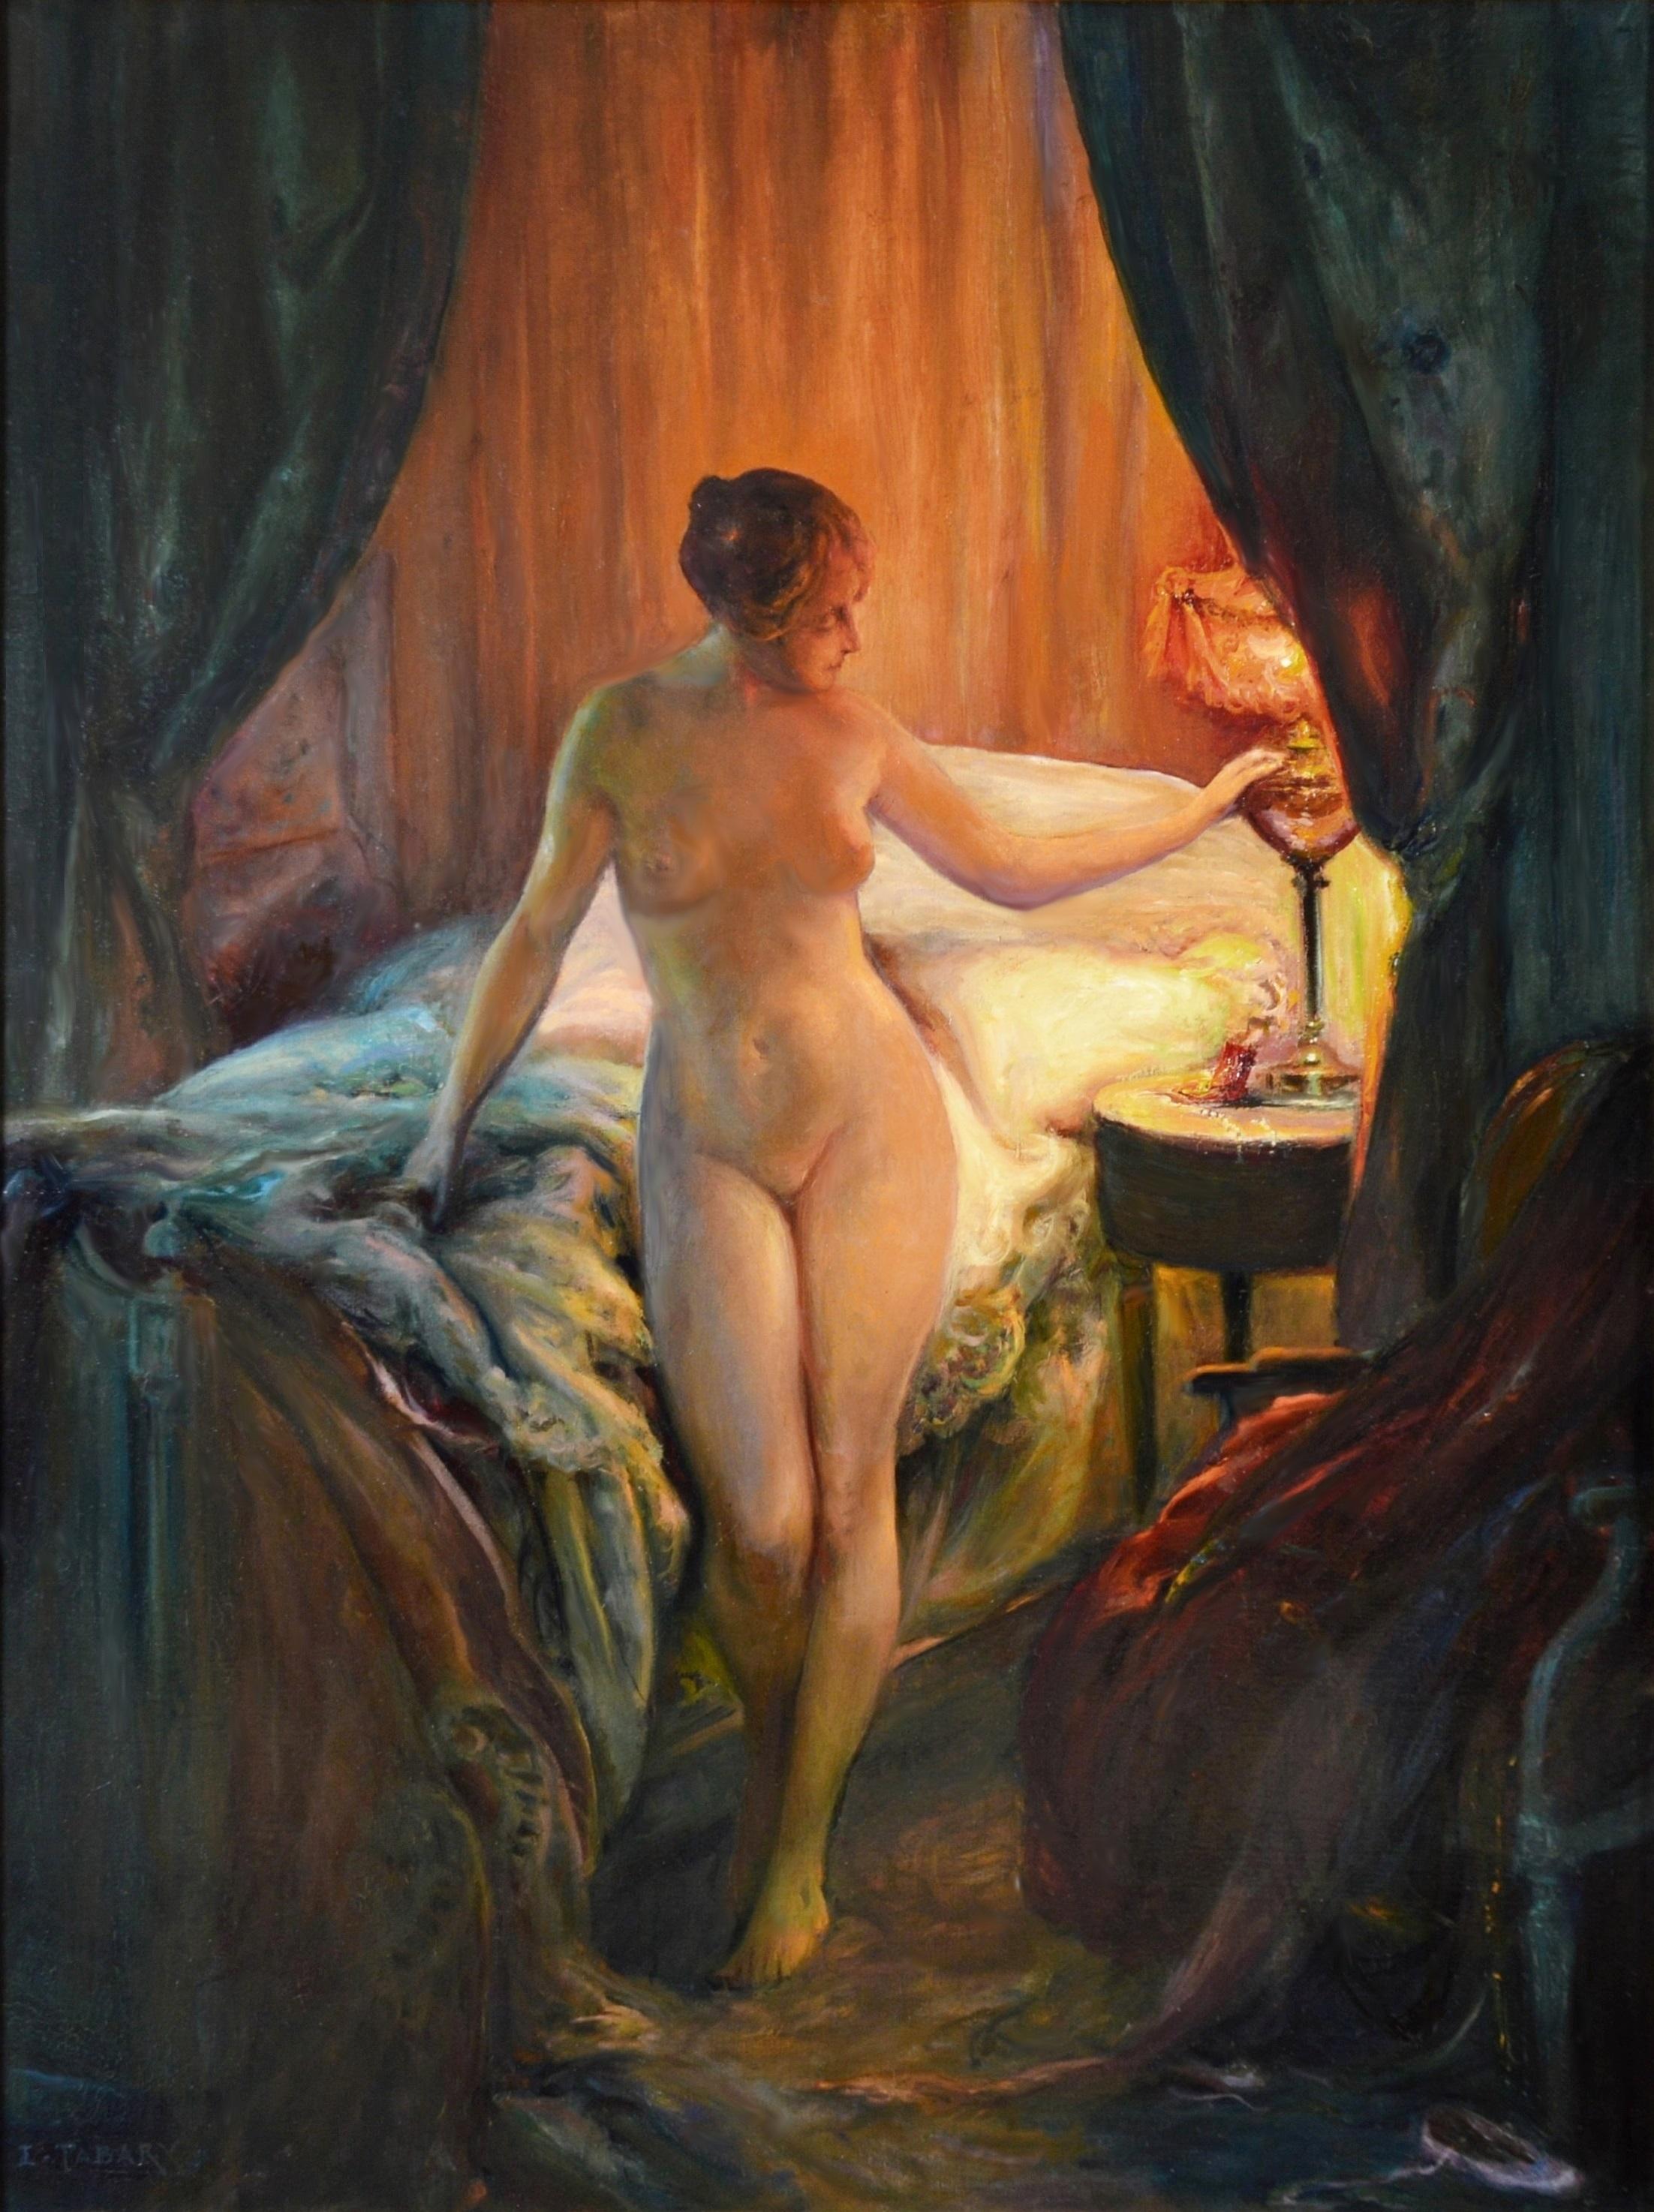 A l'Heure de se Coucher - Impressionist Portrait Oil Painting Nude by Lamplight - Black Portrait Painting by Emile Tabary